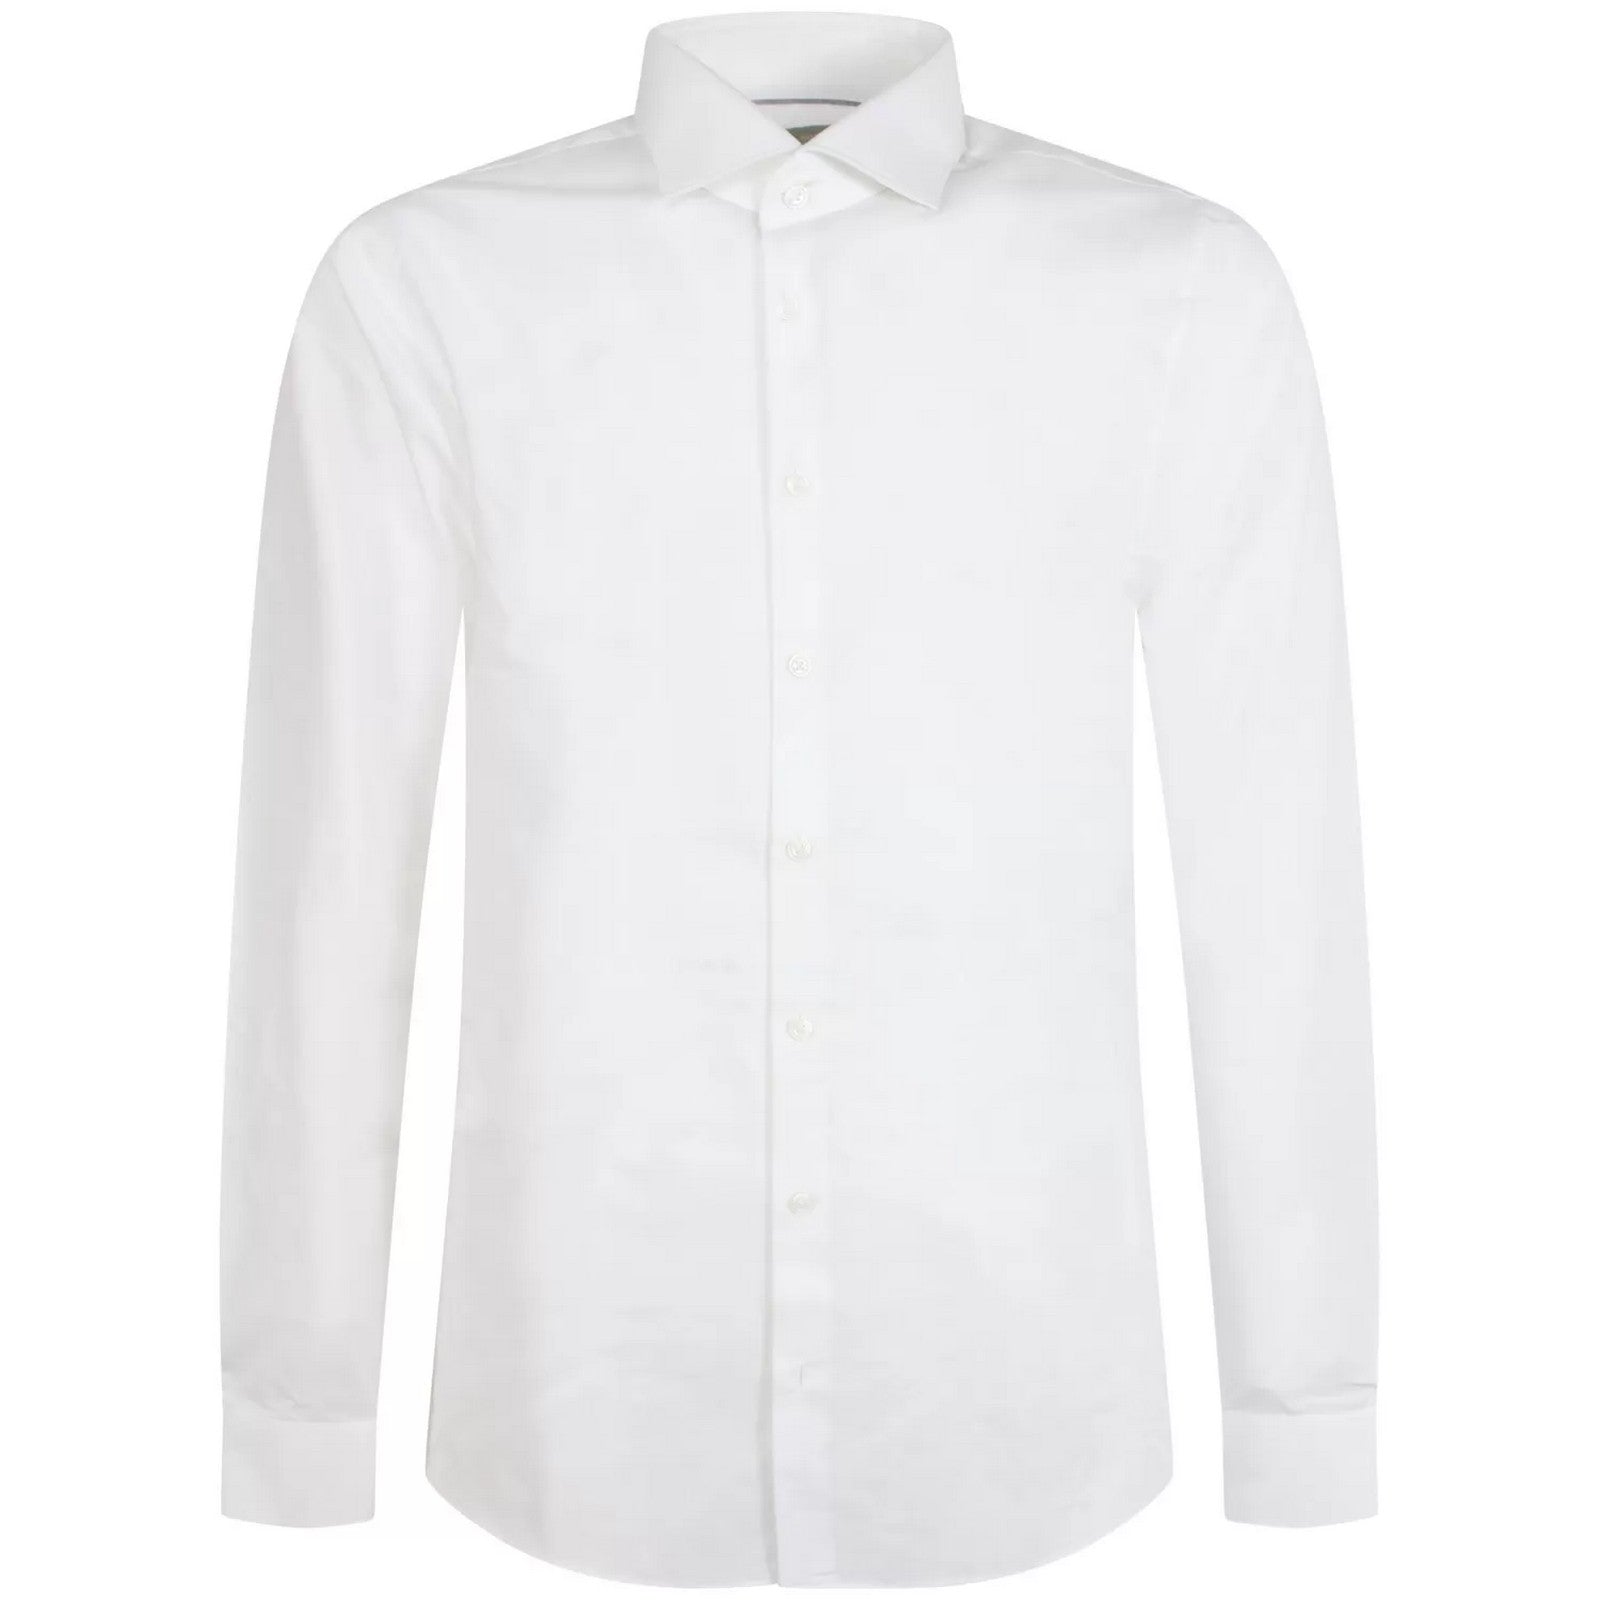 Camicie casual Uomo Michael Kors - Parma Slim Fit Fsc Shirt - Bianco